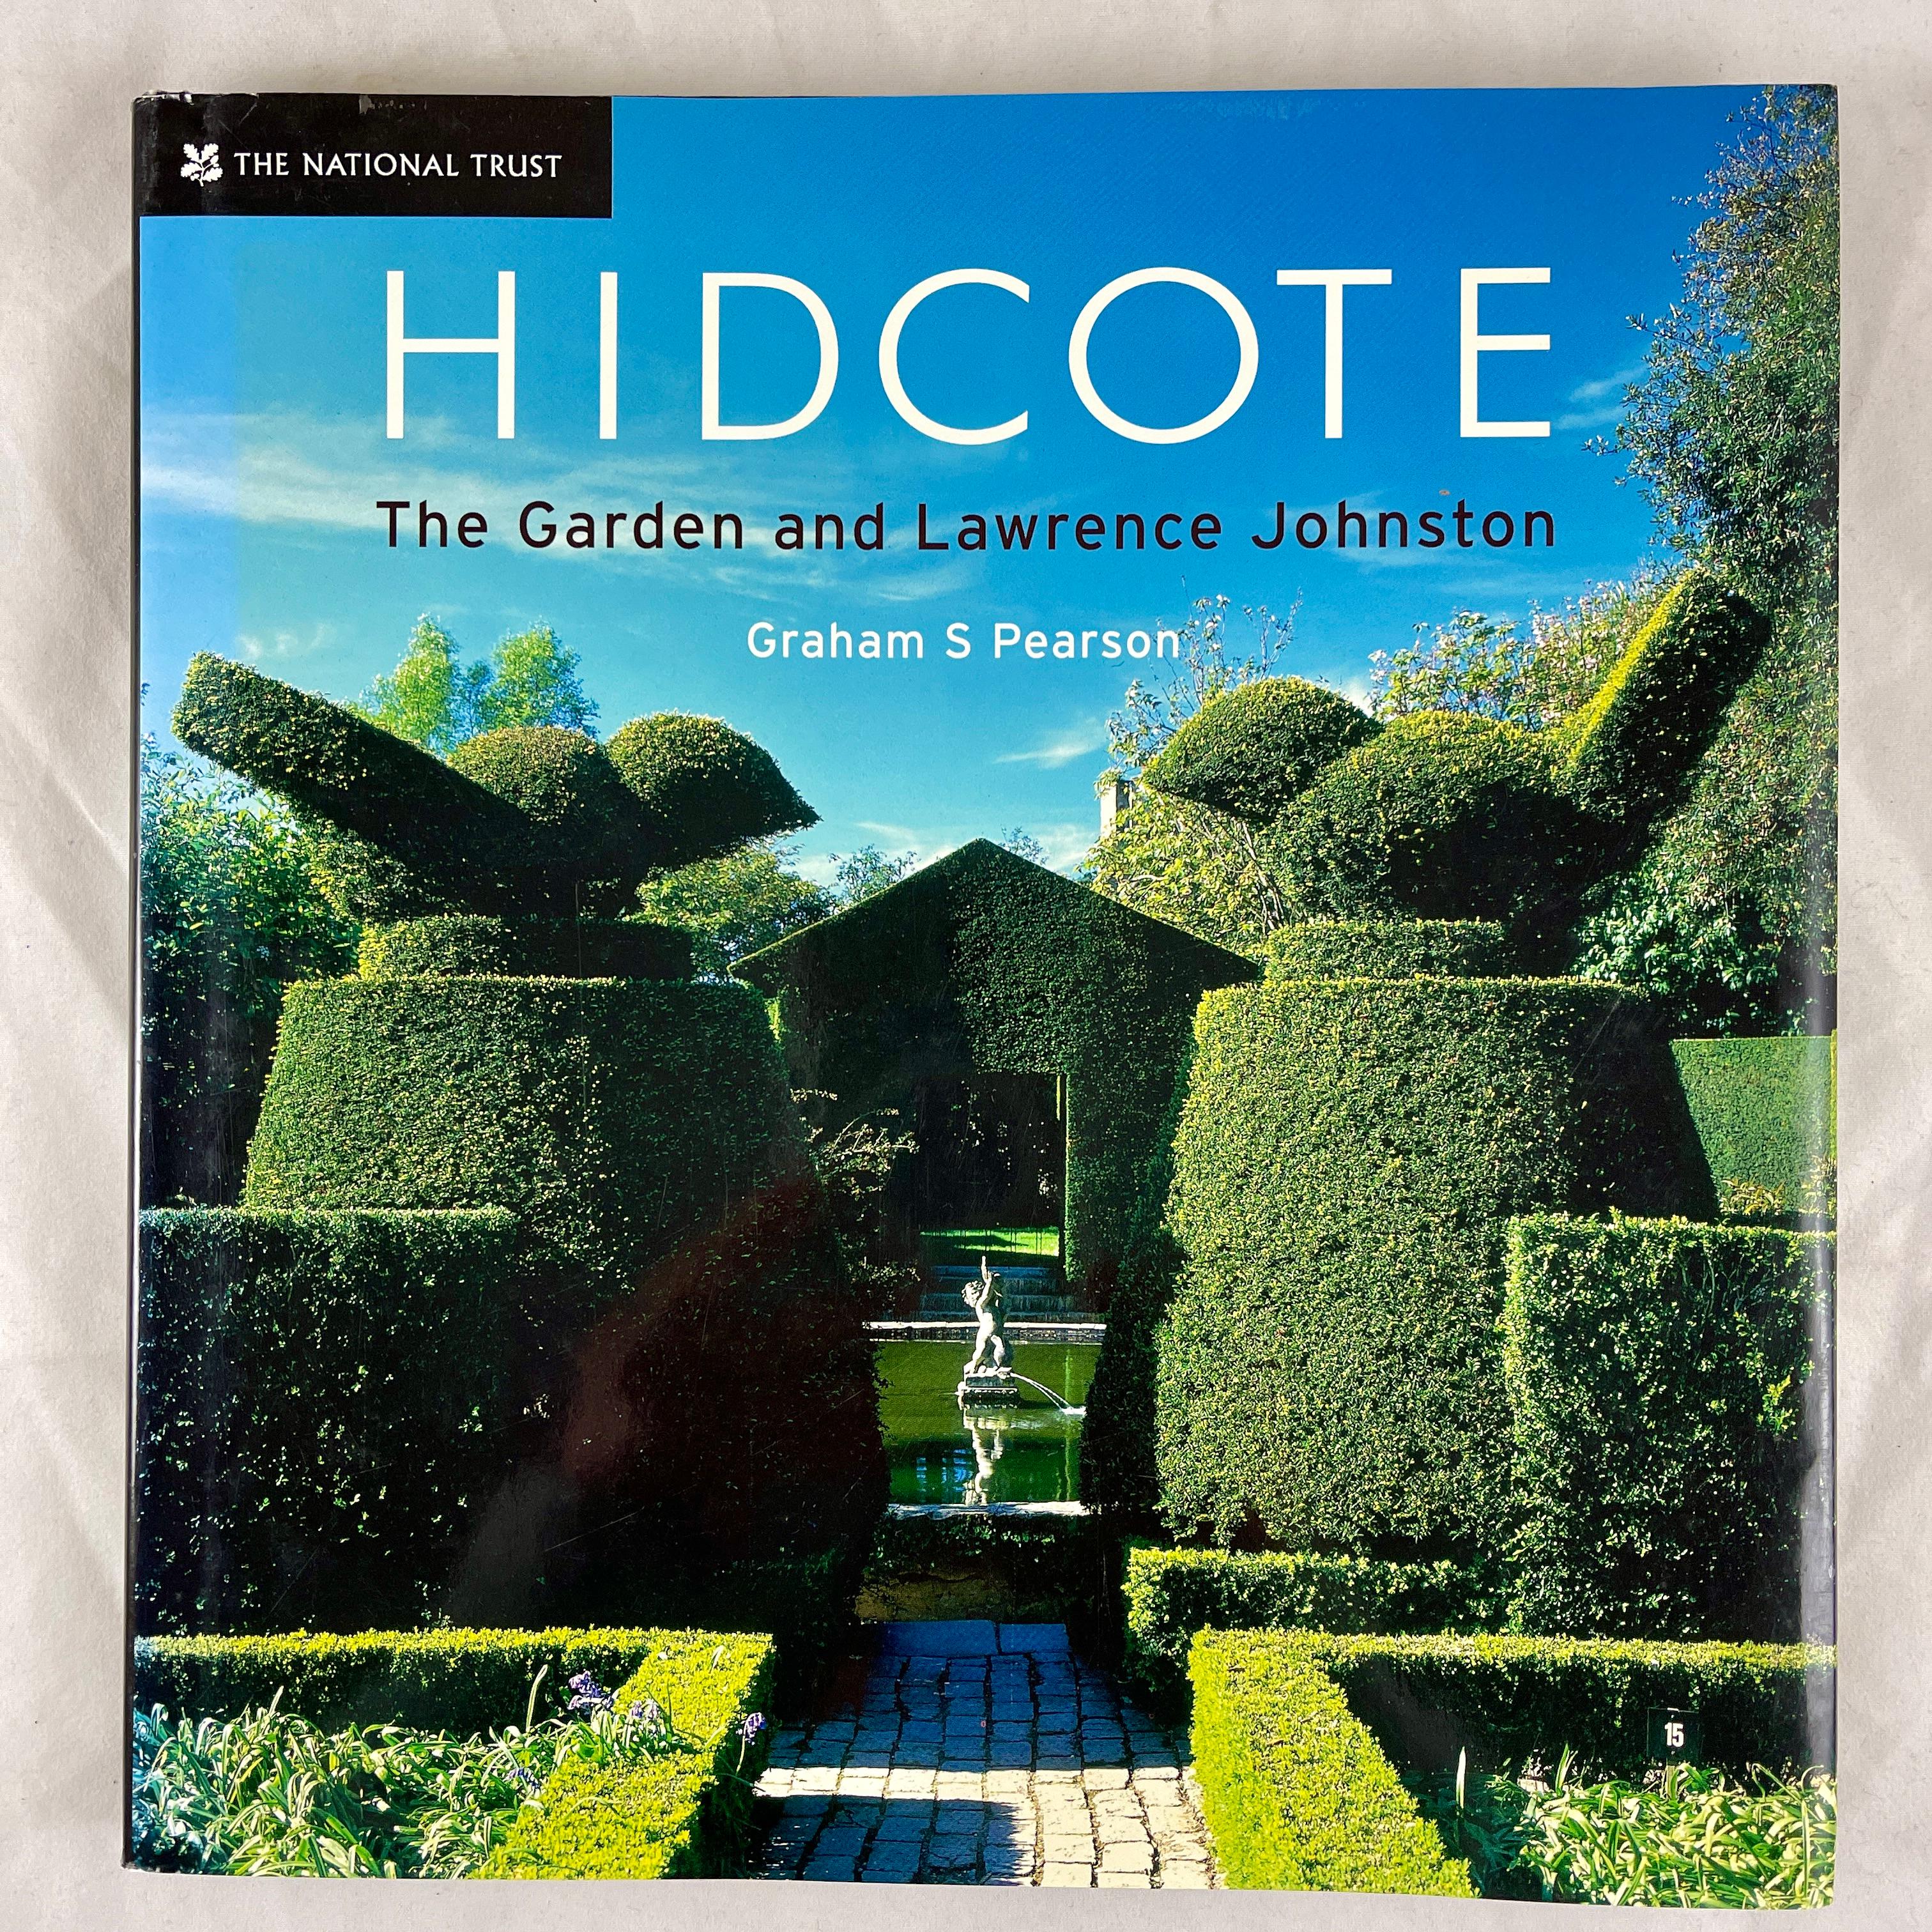 Hidcote the Garden et Lawrence Johnston, Livre du National Trust en vente 2